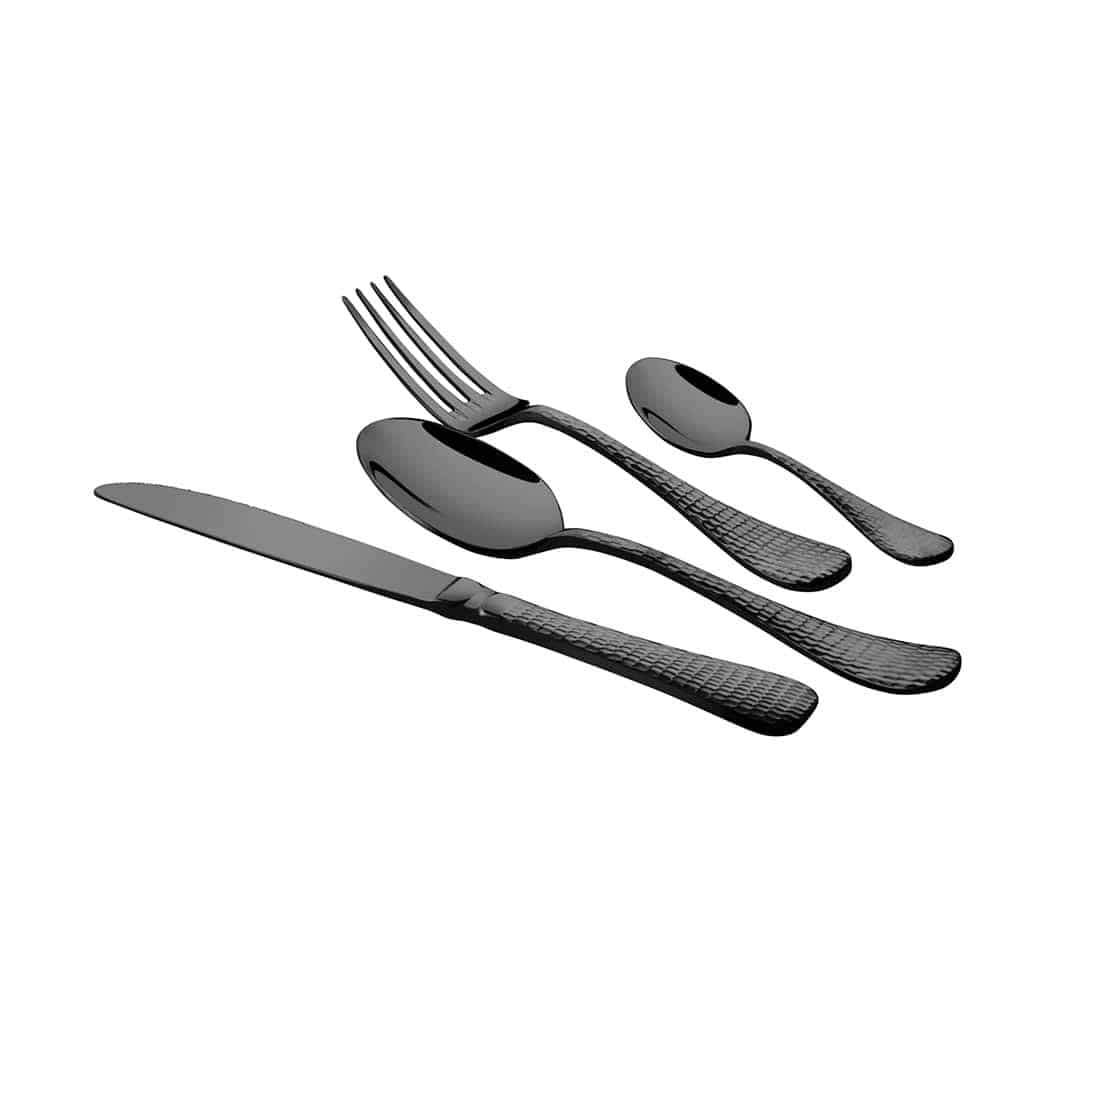 Jagdamba Cutlery Pvt Ltd. Cutlery 24 PCS Titanium Cutlery Set with PVD Coating - New Rosemary Hammered